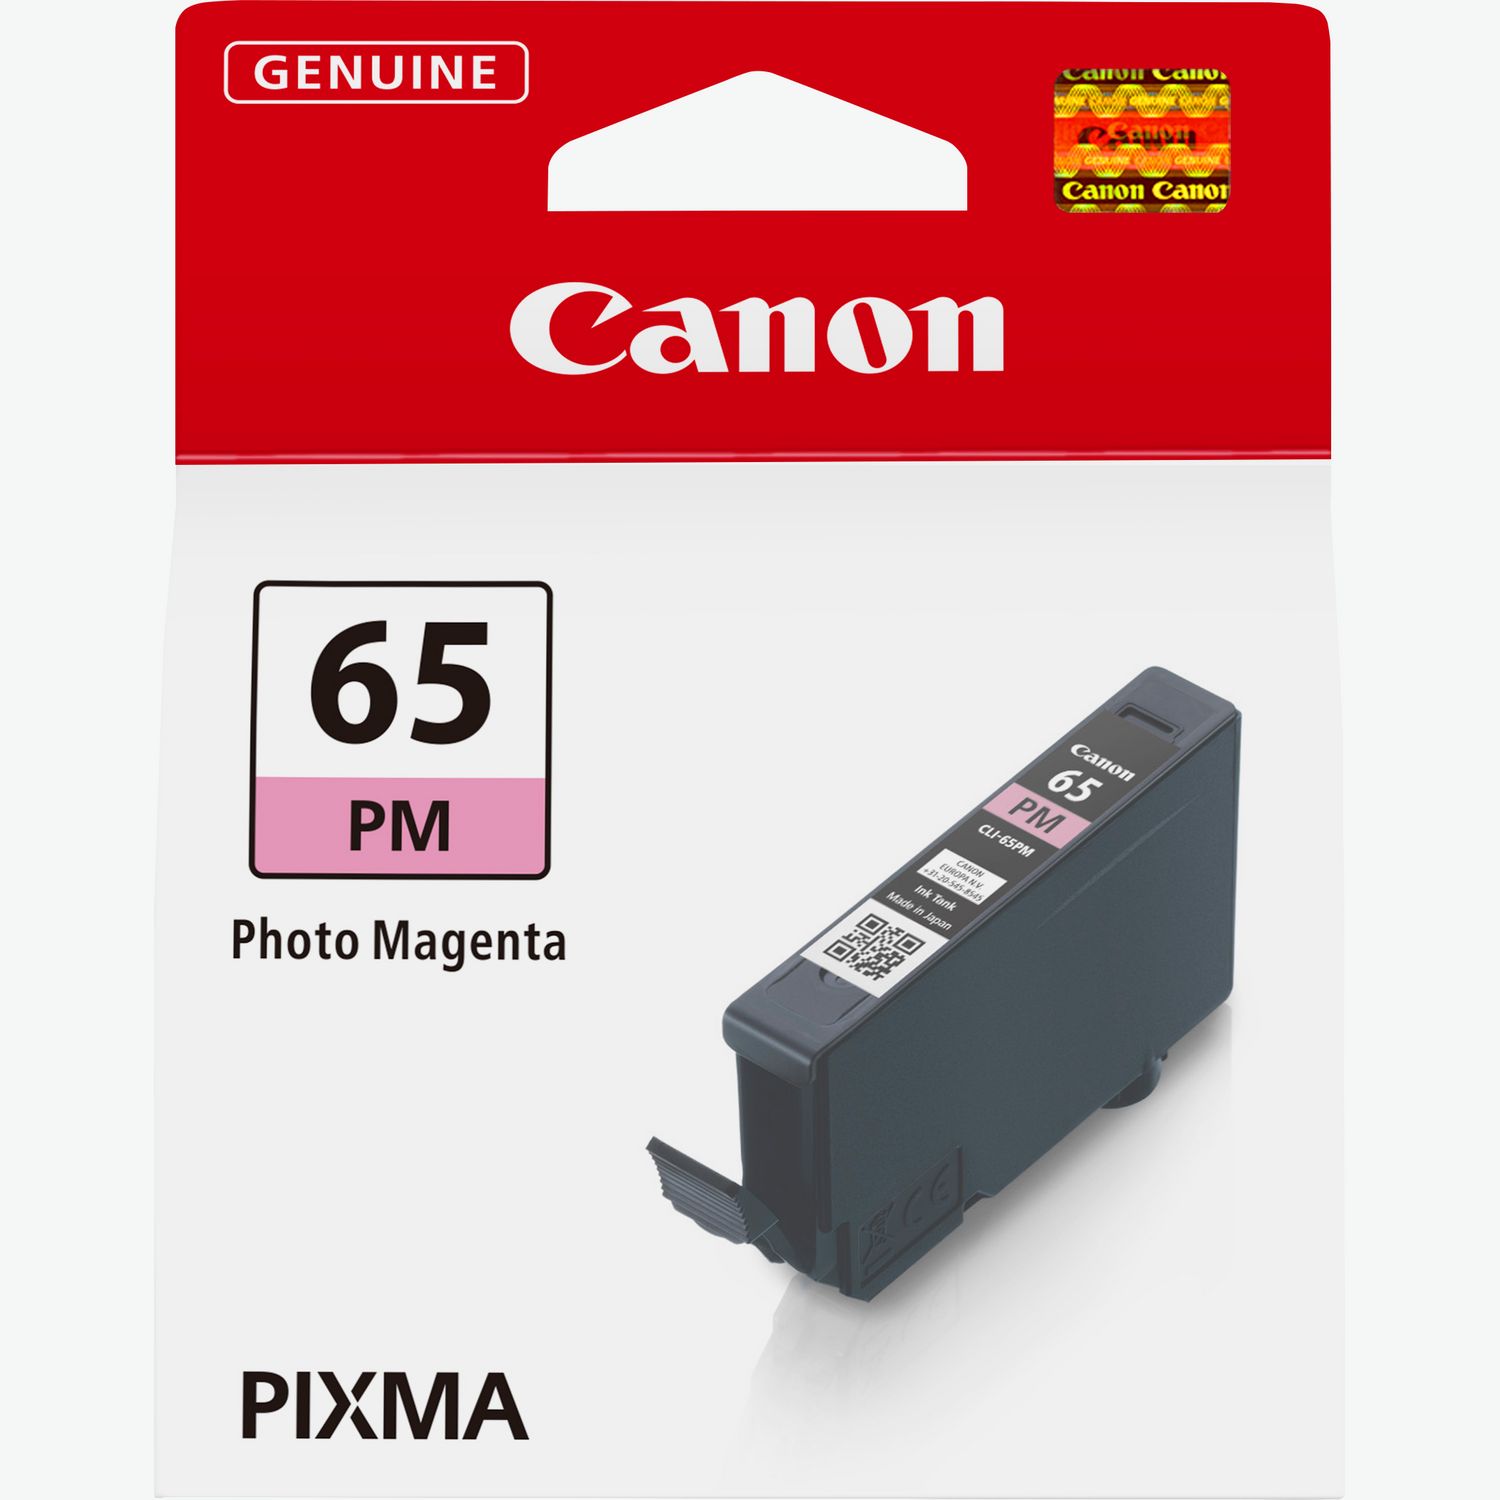  CANON PP- 201 Photo Paper Plus 5x5 inch 20 Sheets